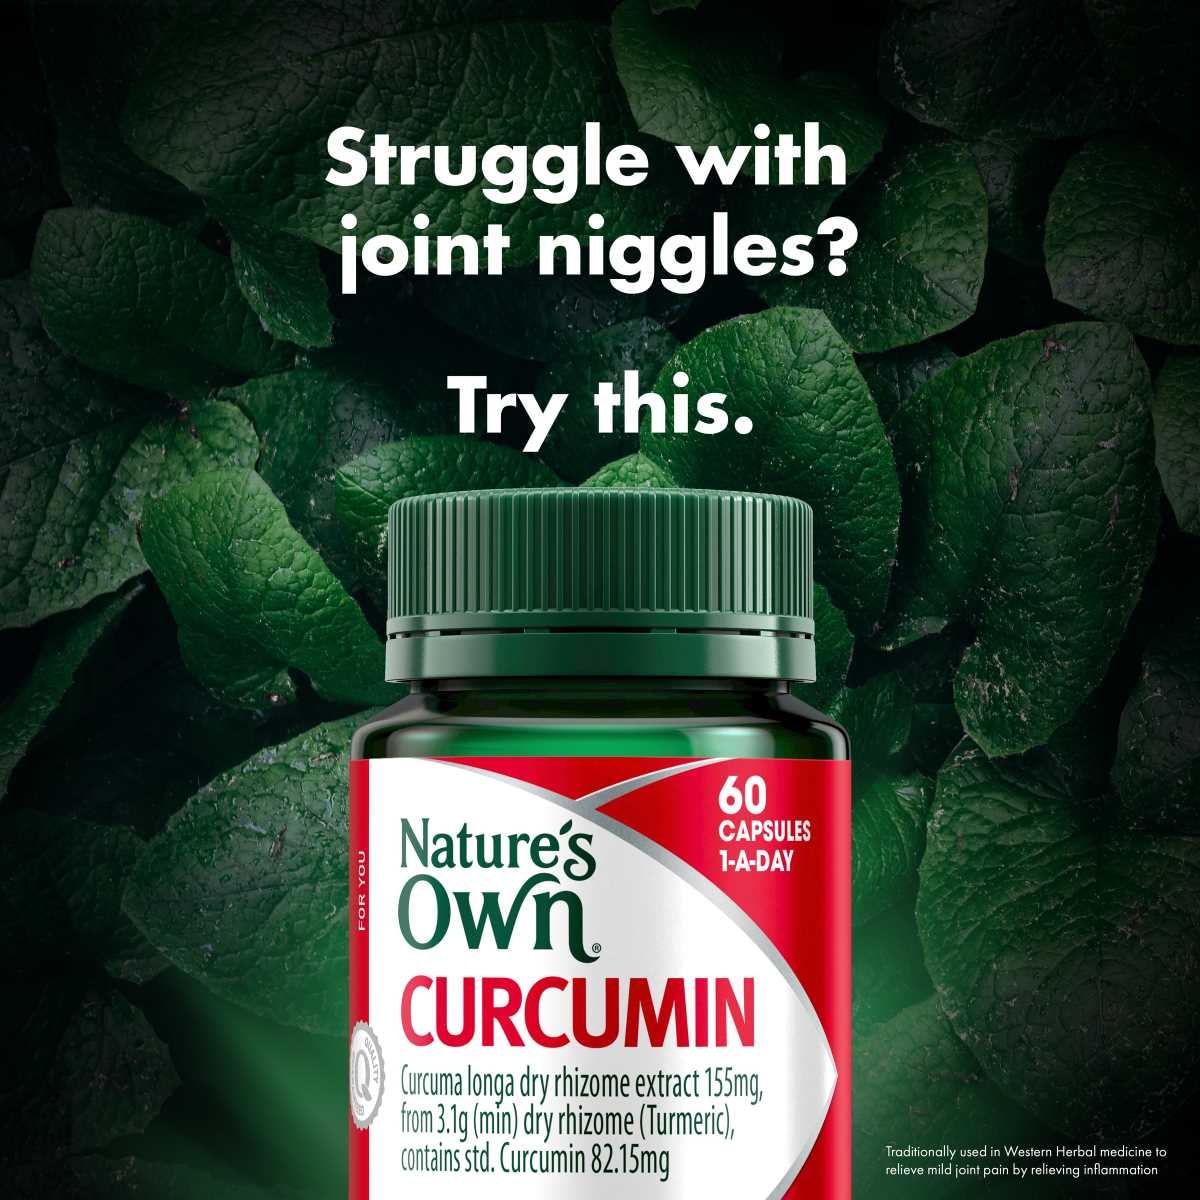 Nature's Own Curcumin 60 Capsules